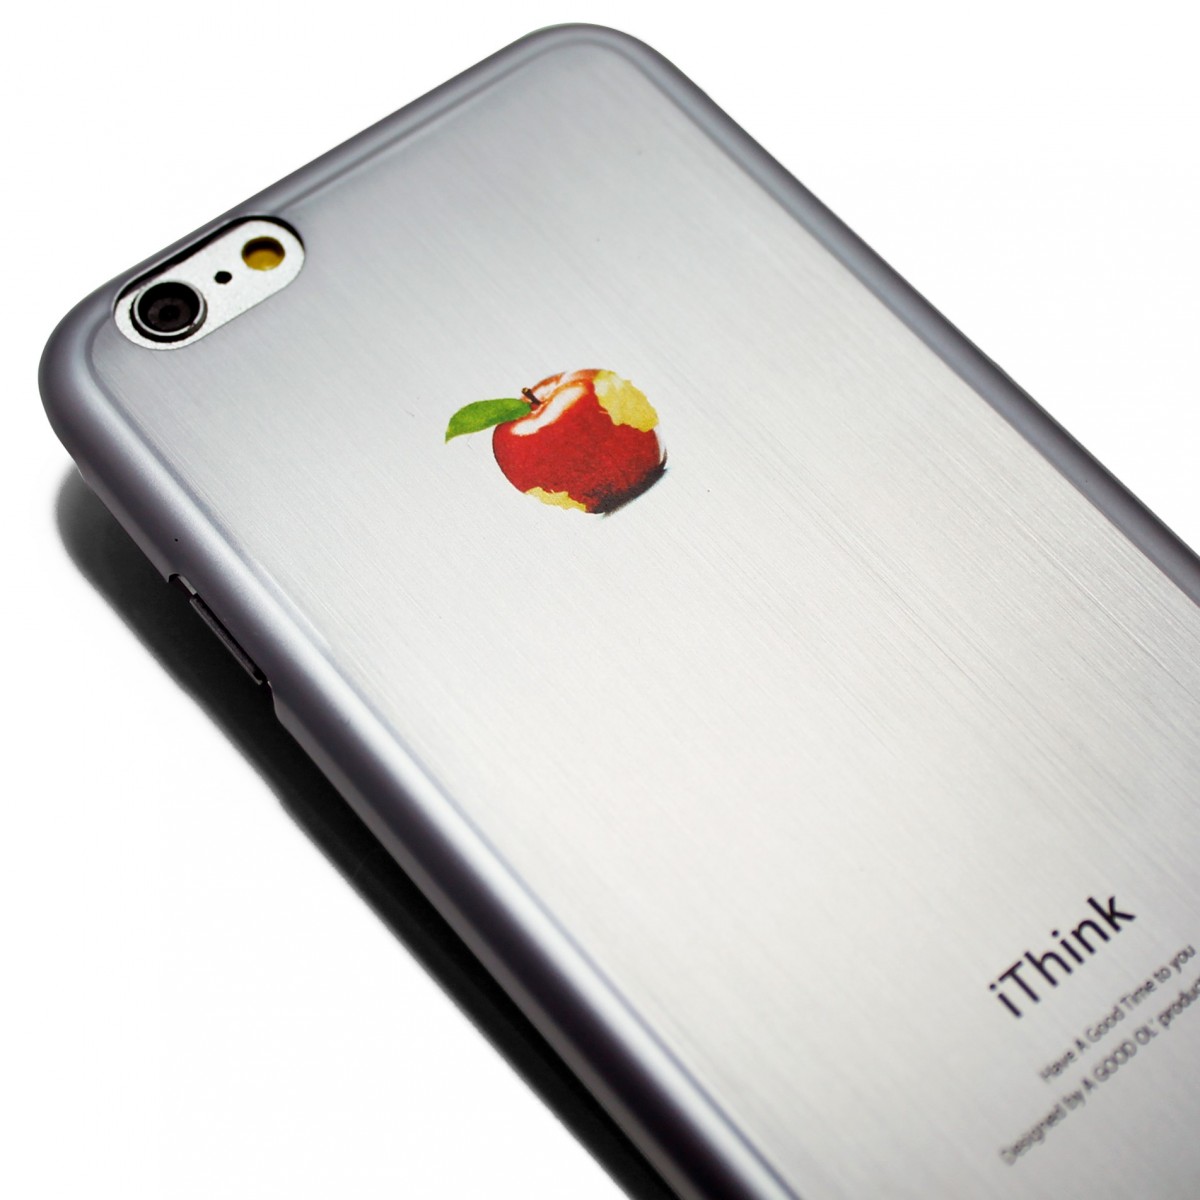 Iphone6 Iphone6sケース 4 7寸 合金チタンケースiphoneカバー マットシルバー リンゴ Iichi ハンドメイド クラフト作品 手仕事品の通販